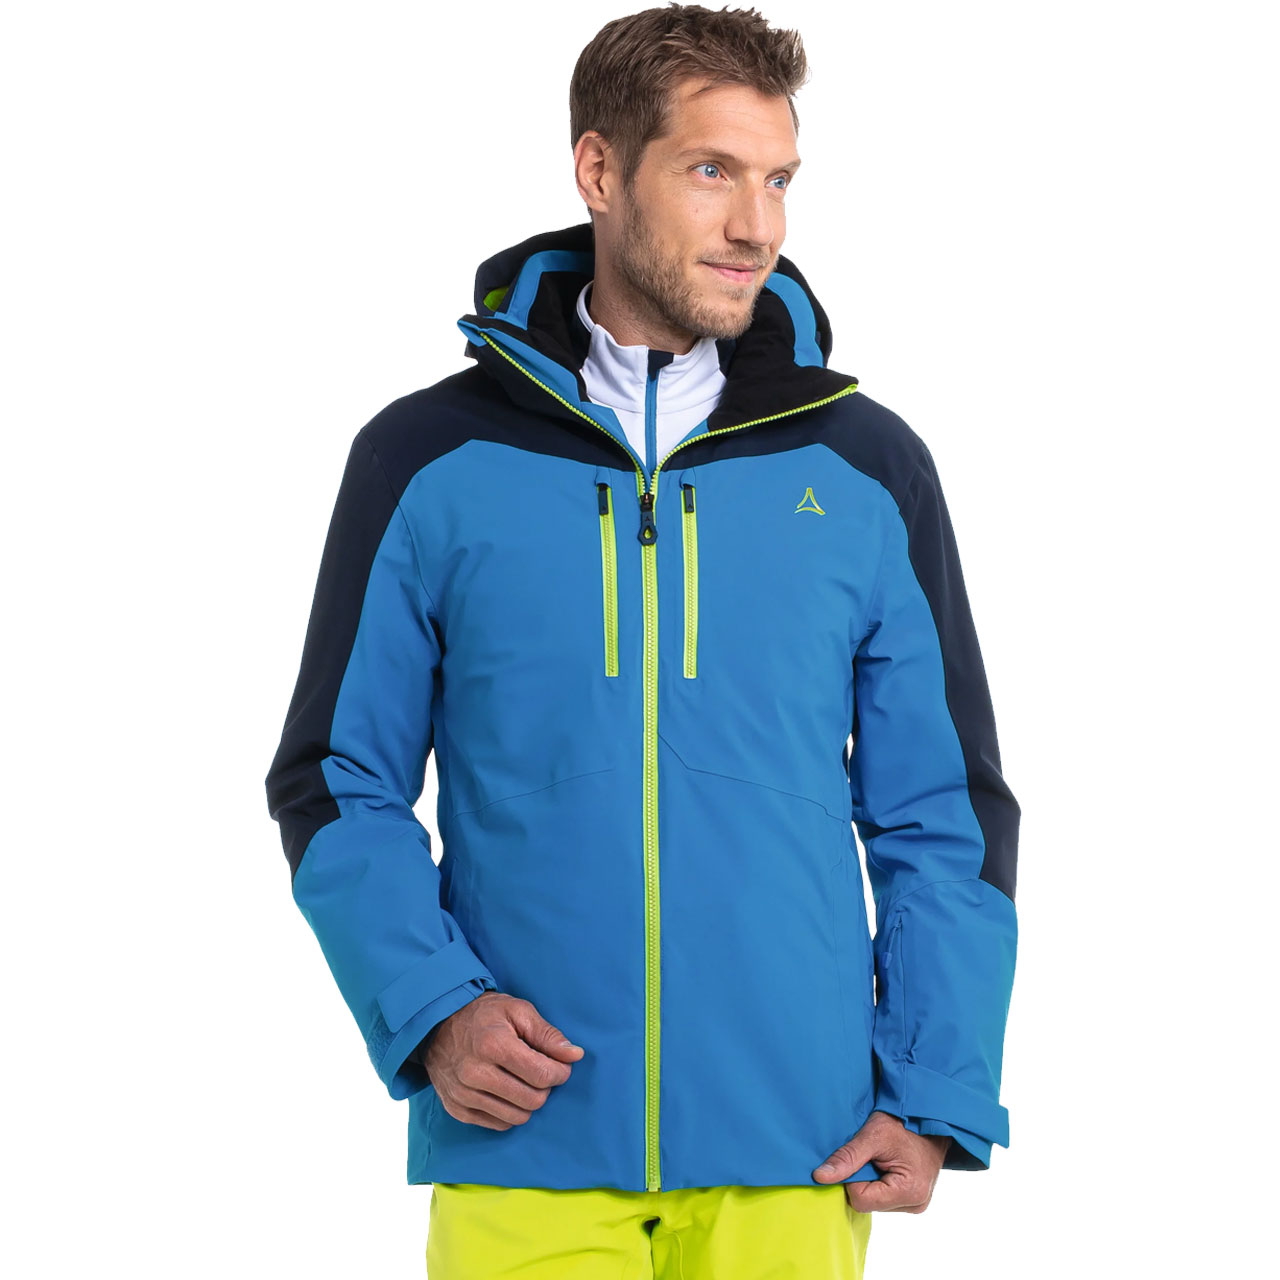 Schöffel Men Jacket indigo |Men skiwear | Skiwear | Alpine Skis | XSPO.com